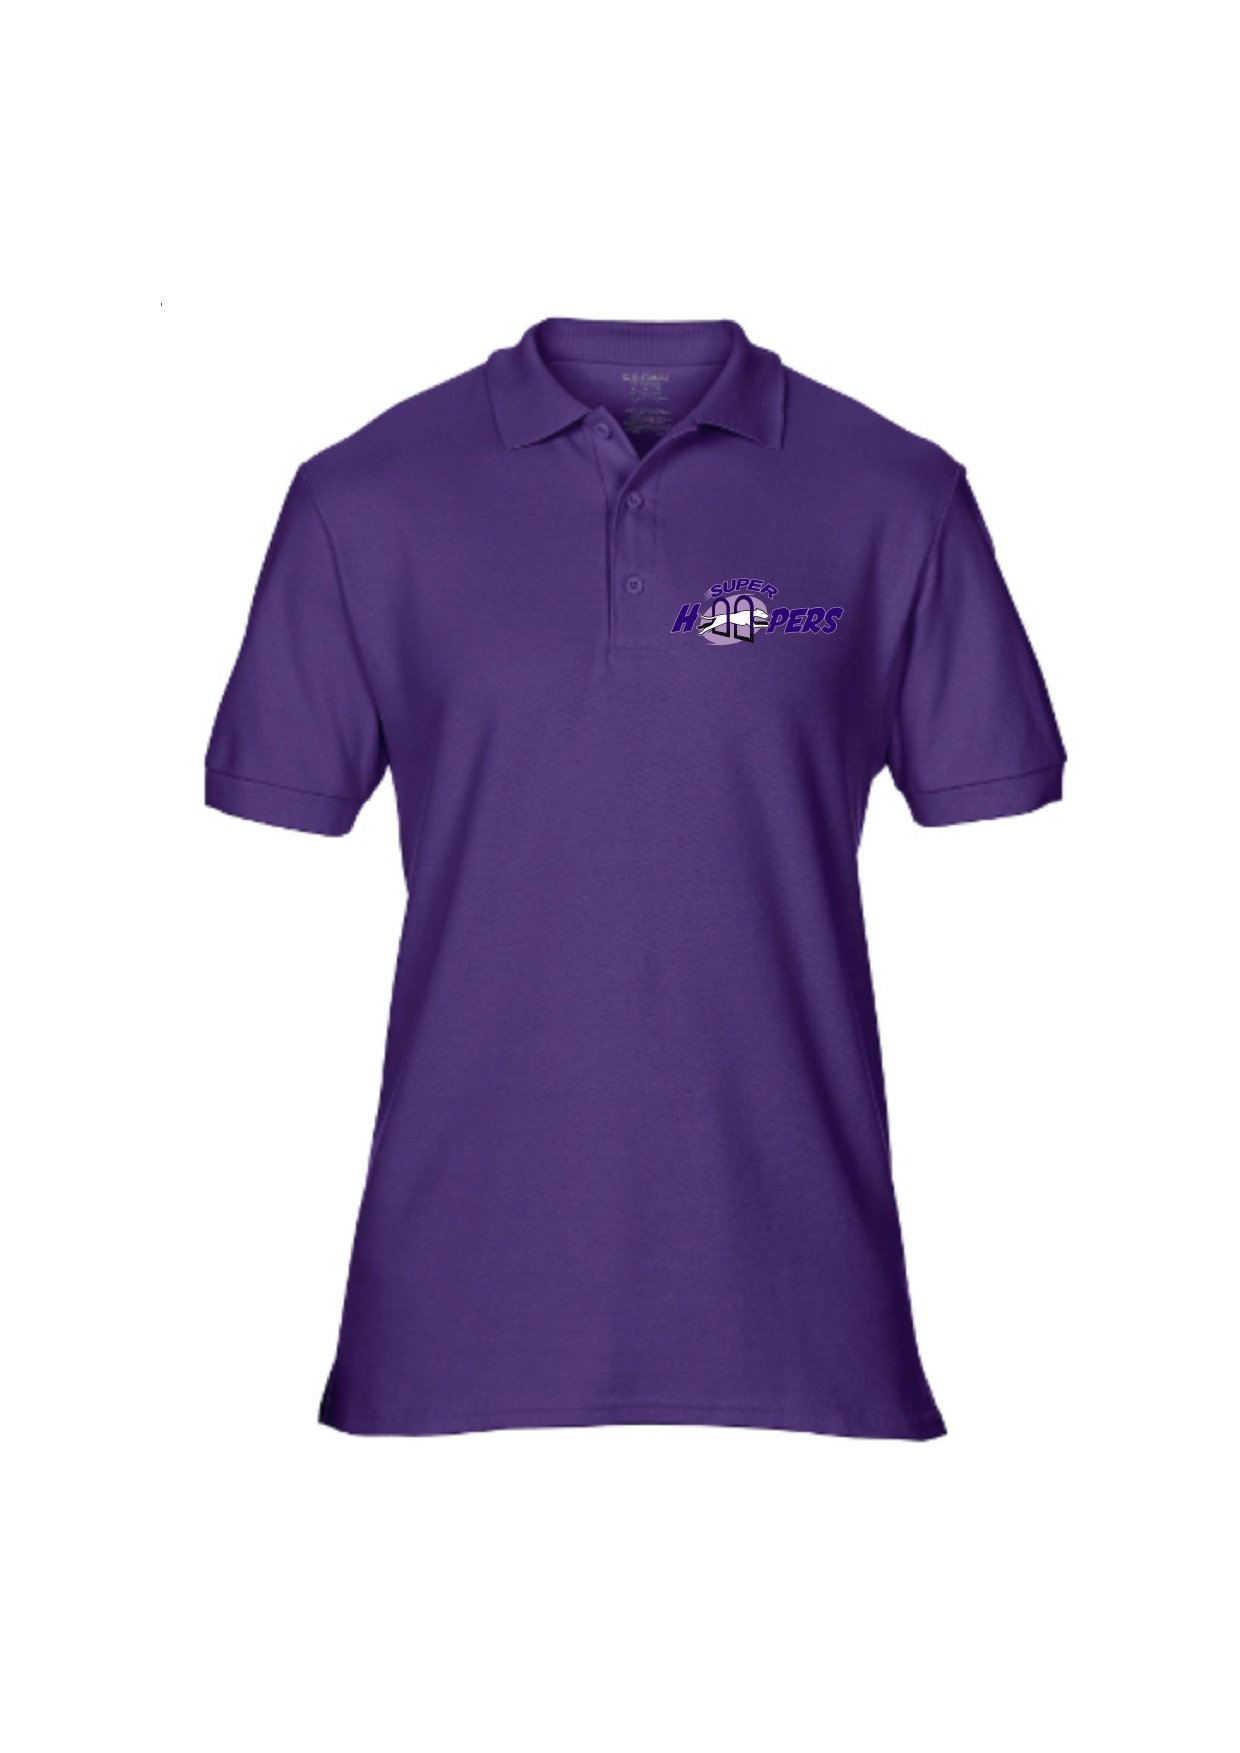 Super Hoopers Polo shirt 3XL – Purple – Pooch